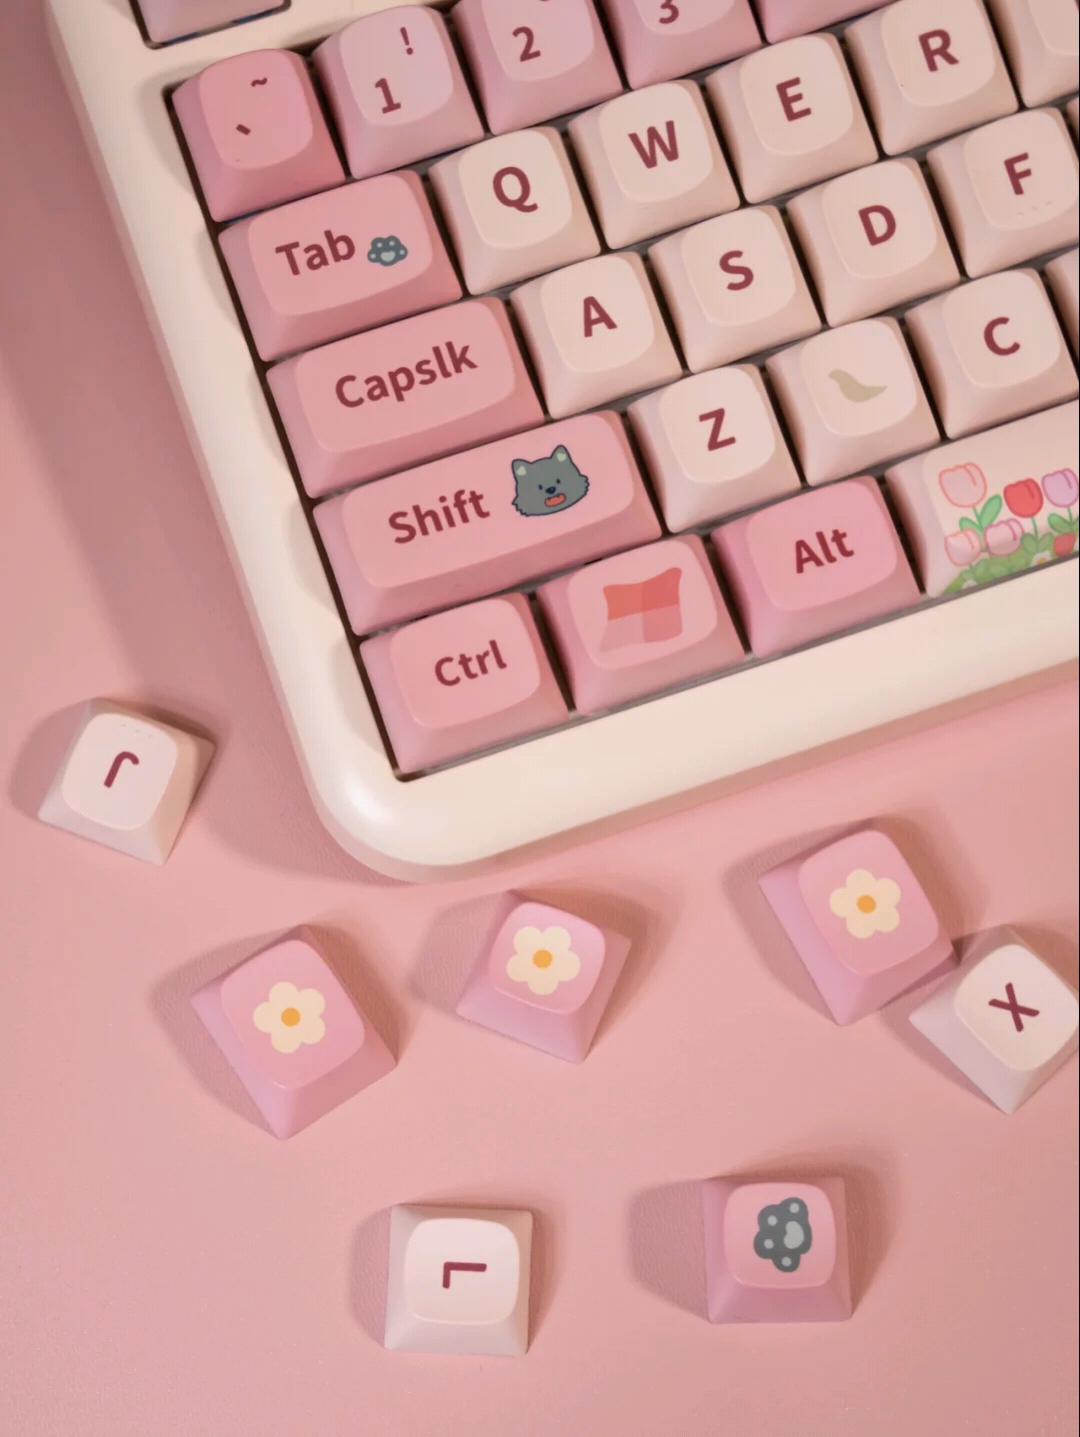 General 1080x1437 keyboards CoolKiller pink